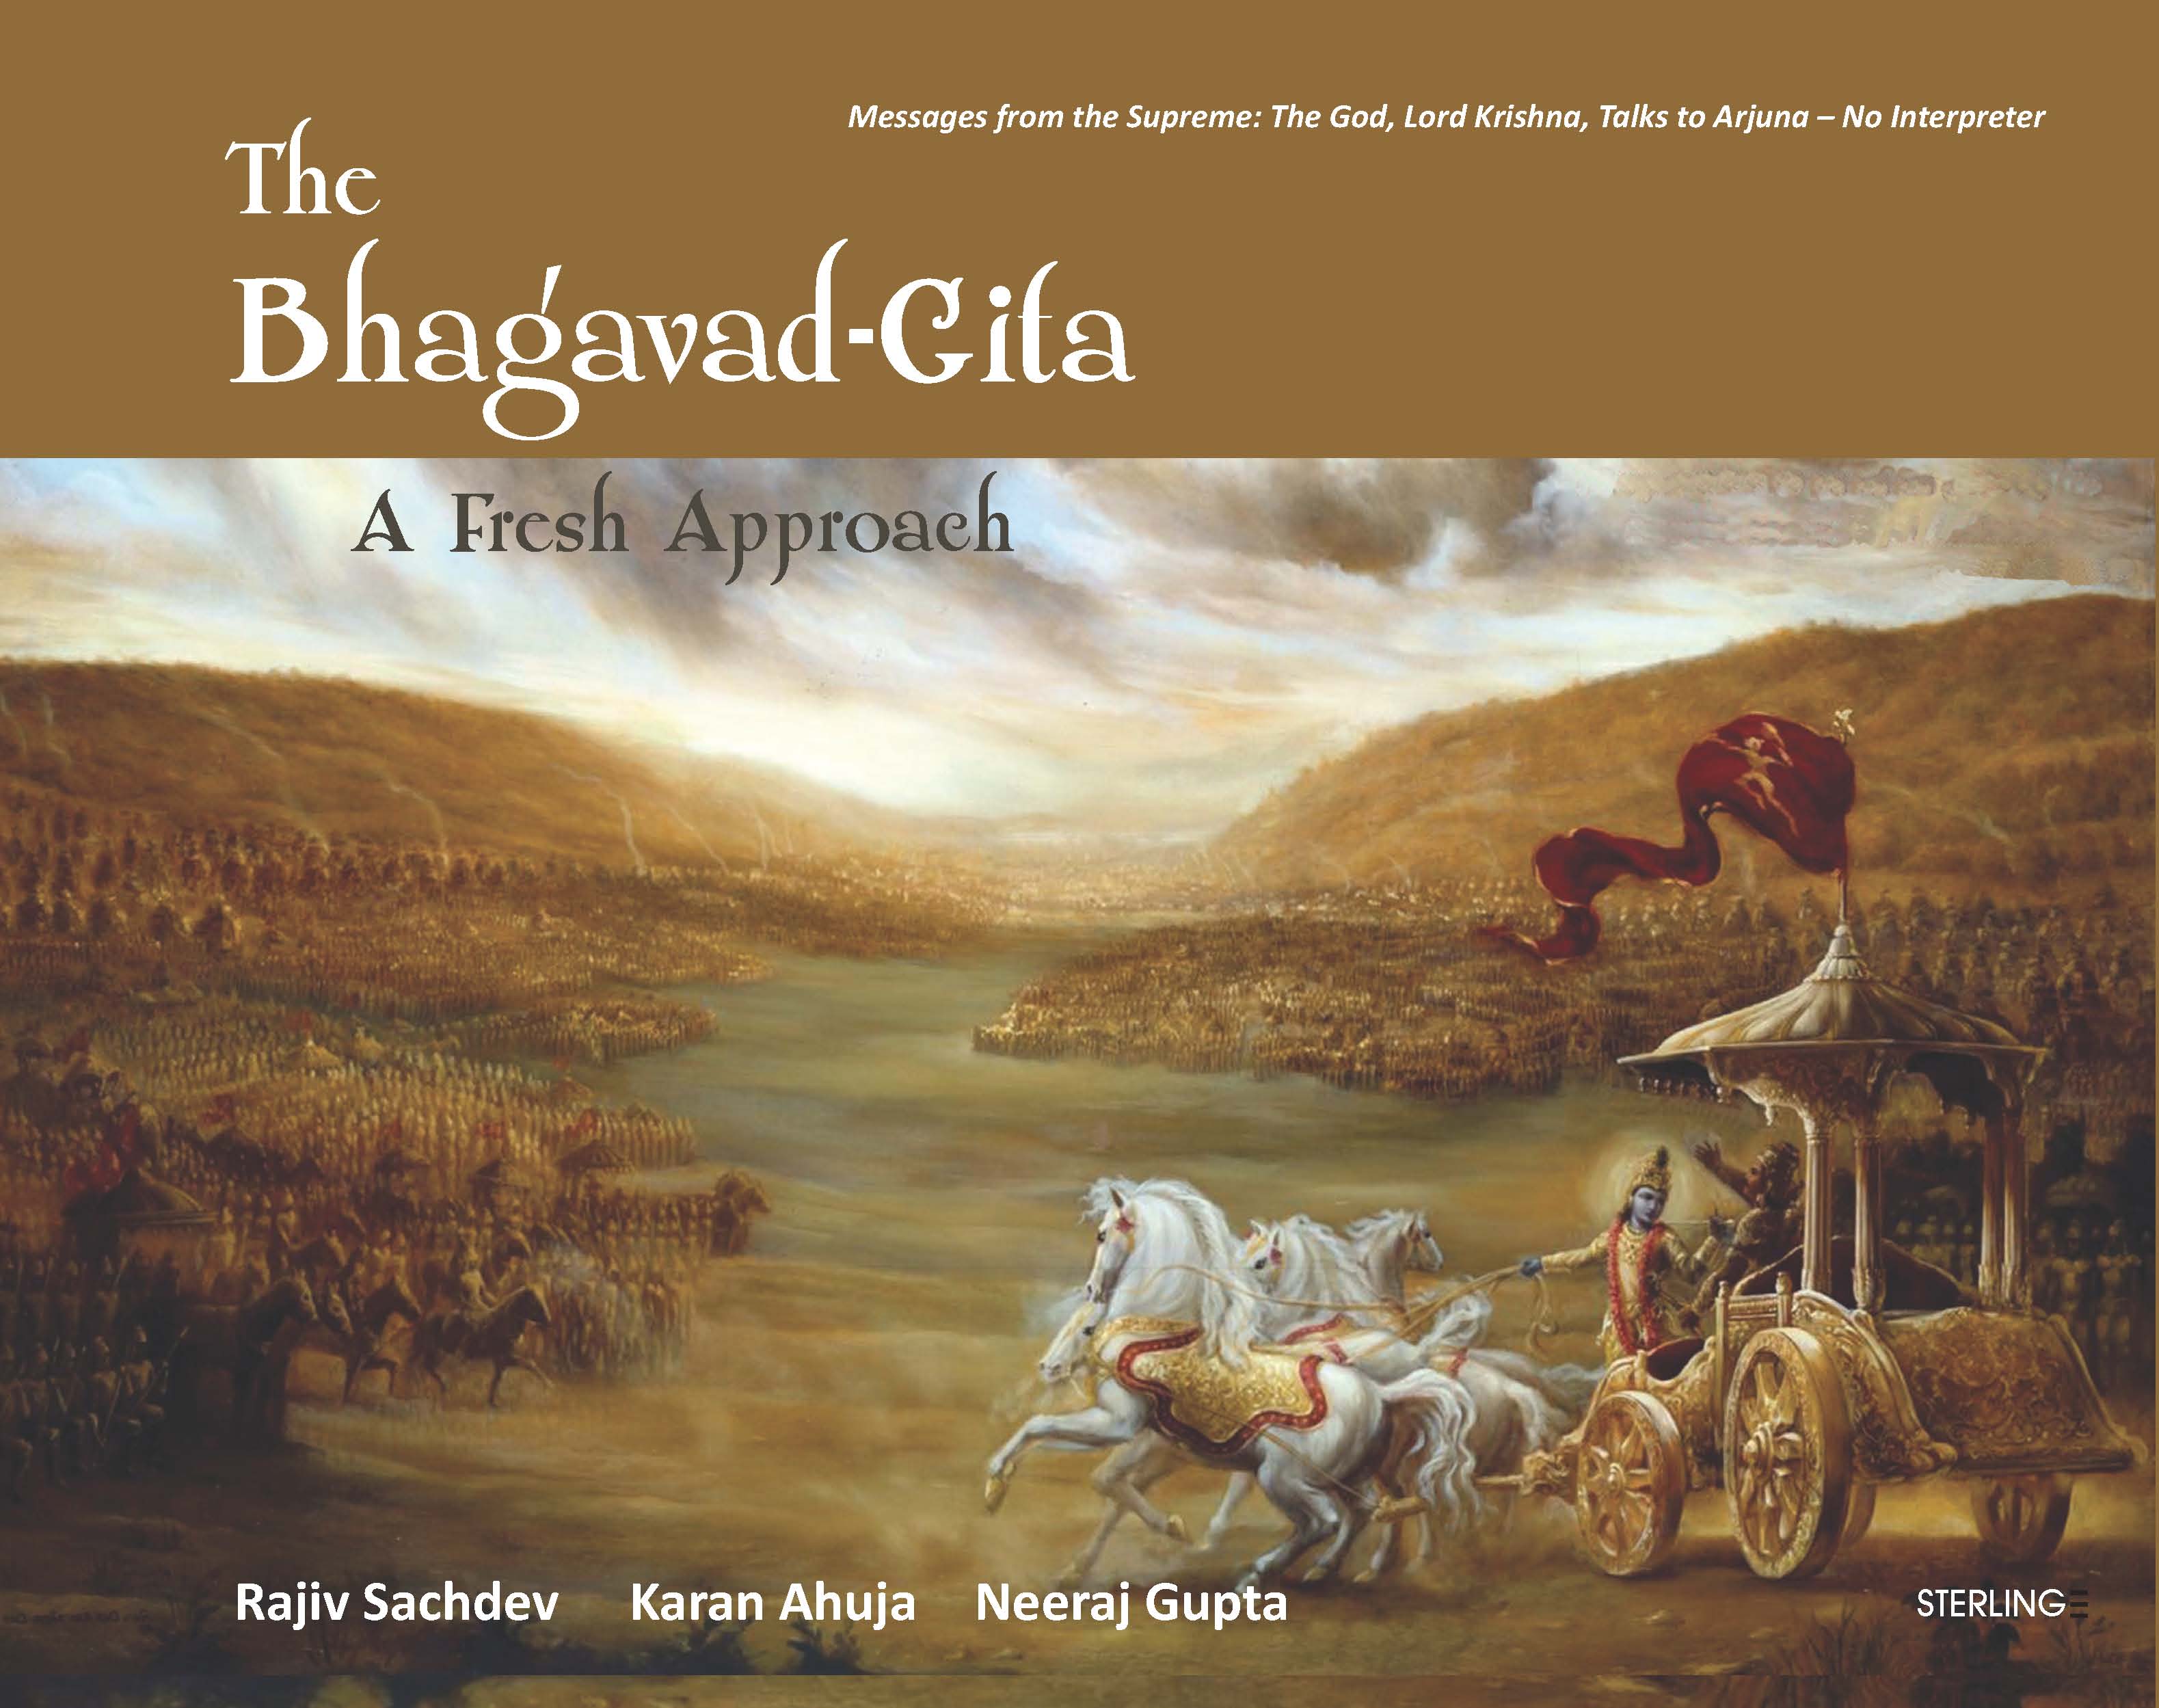 The Bagavad Gita